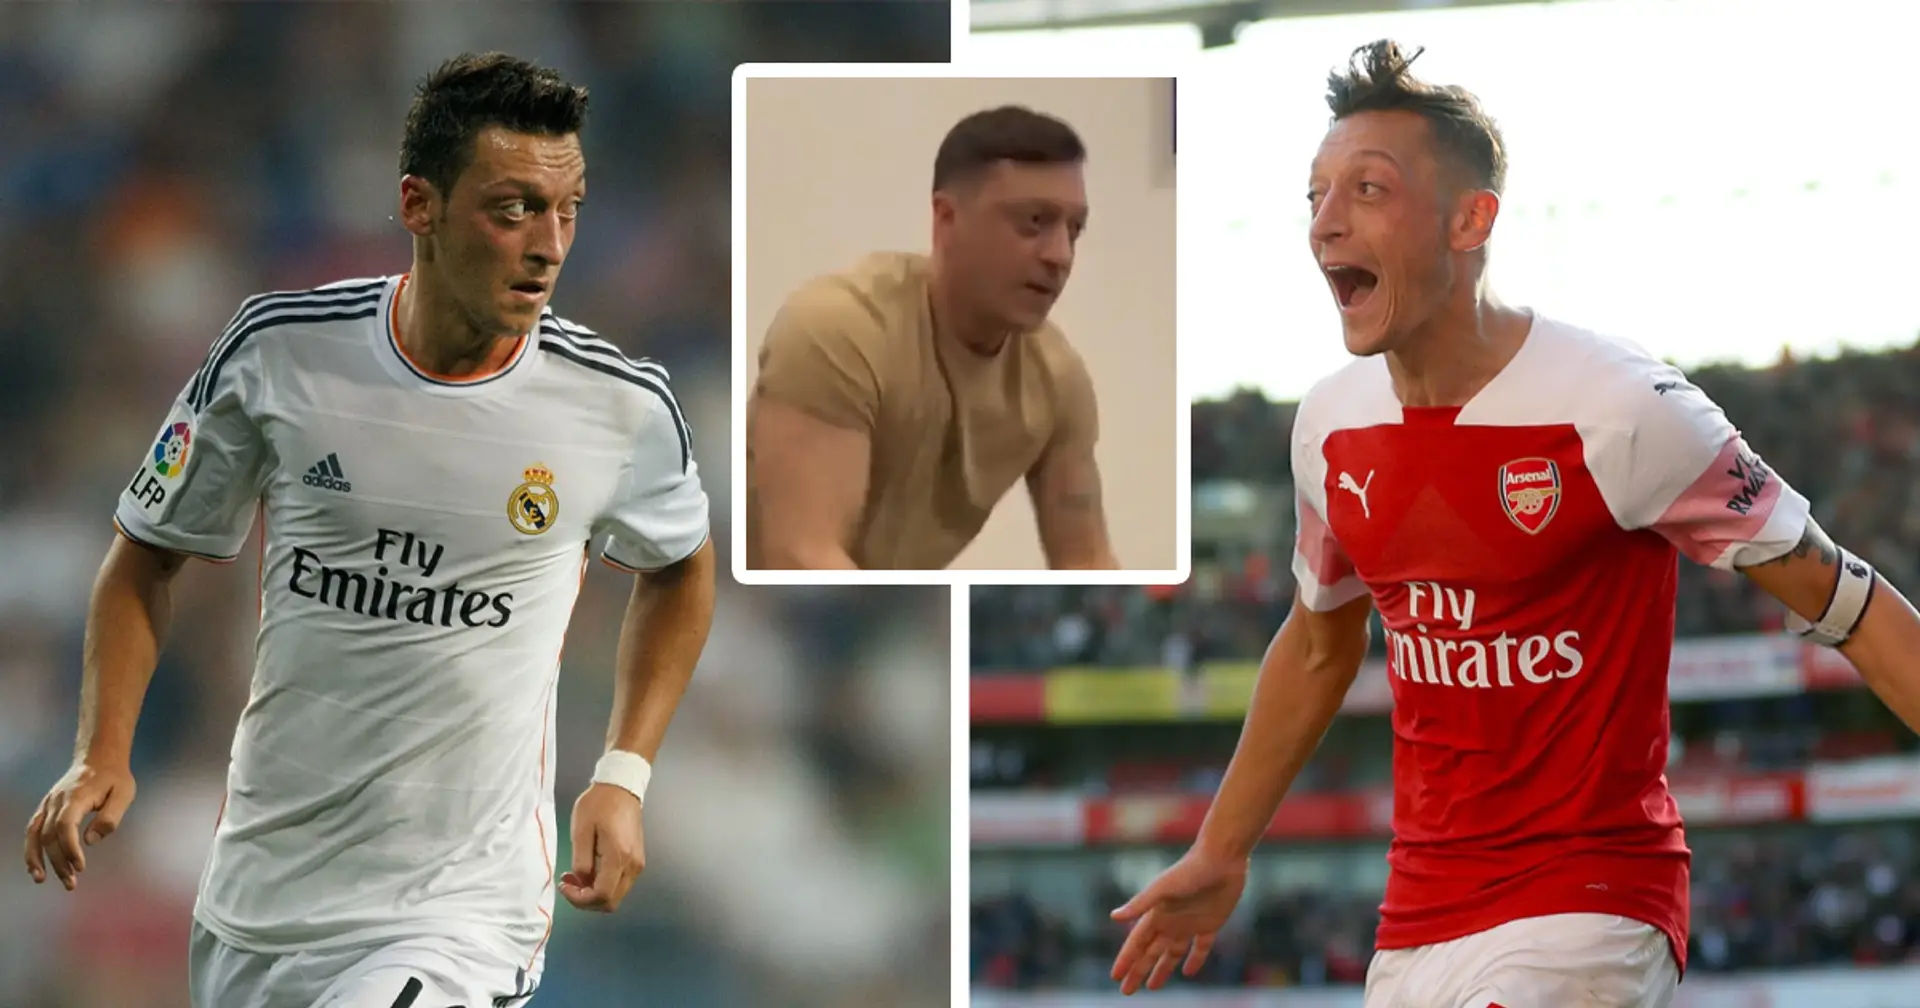 Mesut Özil shows off insane body transformation - he looks unrecognisable